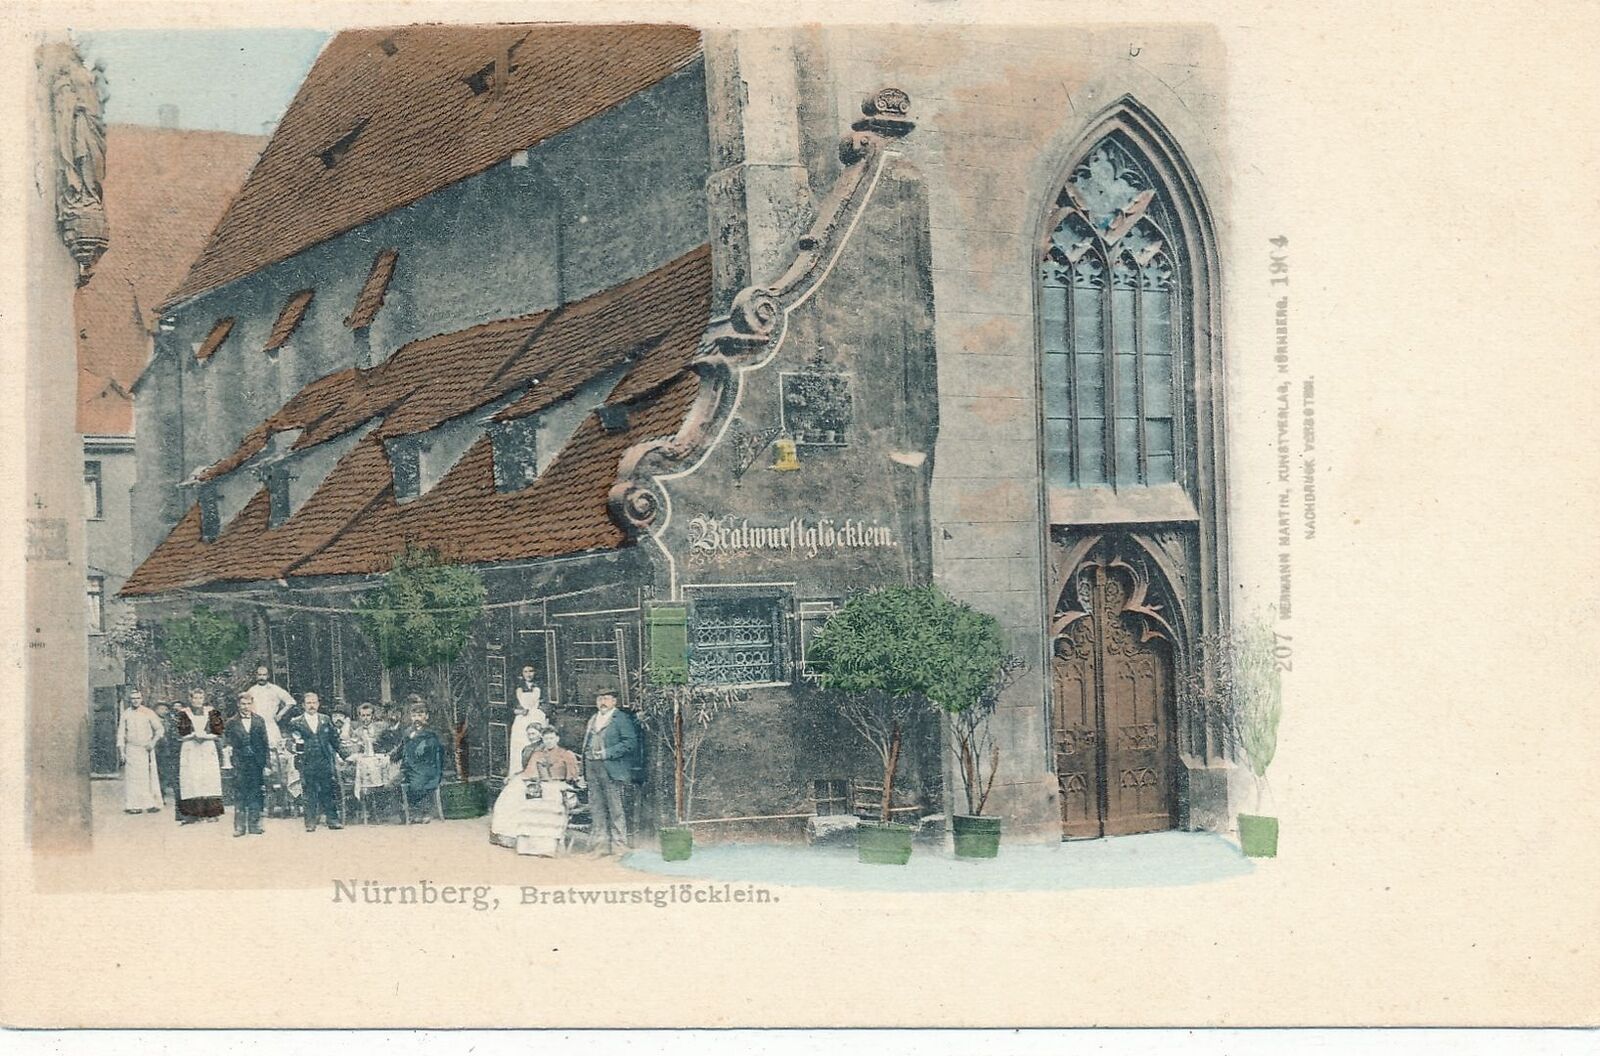 NURNBERG - Bratwurstglocklein Postcard - Nuremberg - Germany - udb (pre 1908)